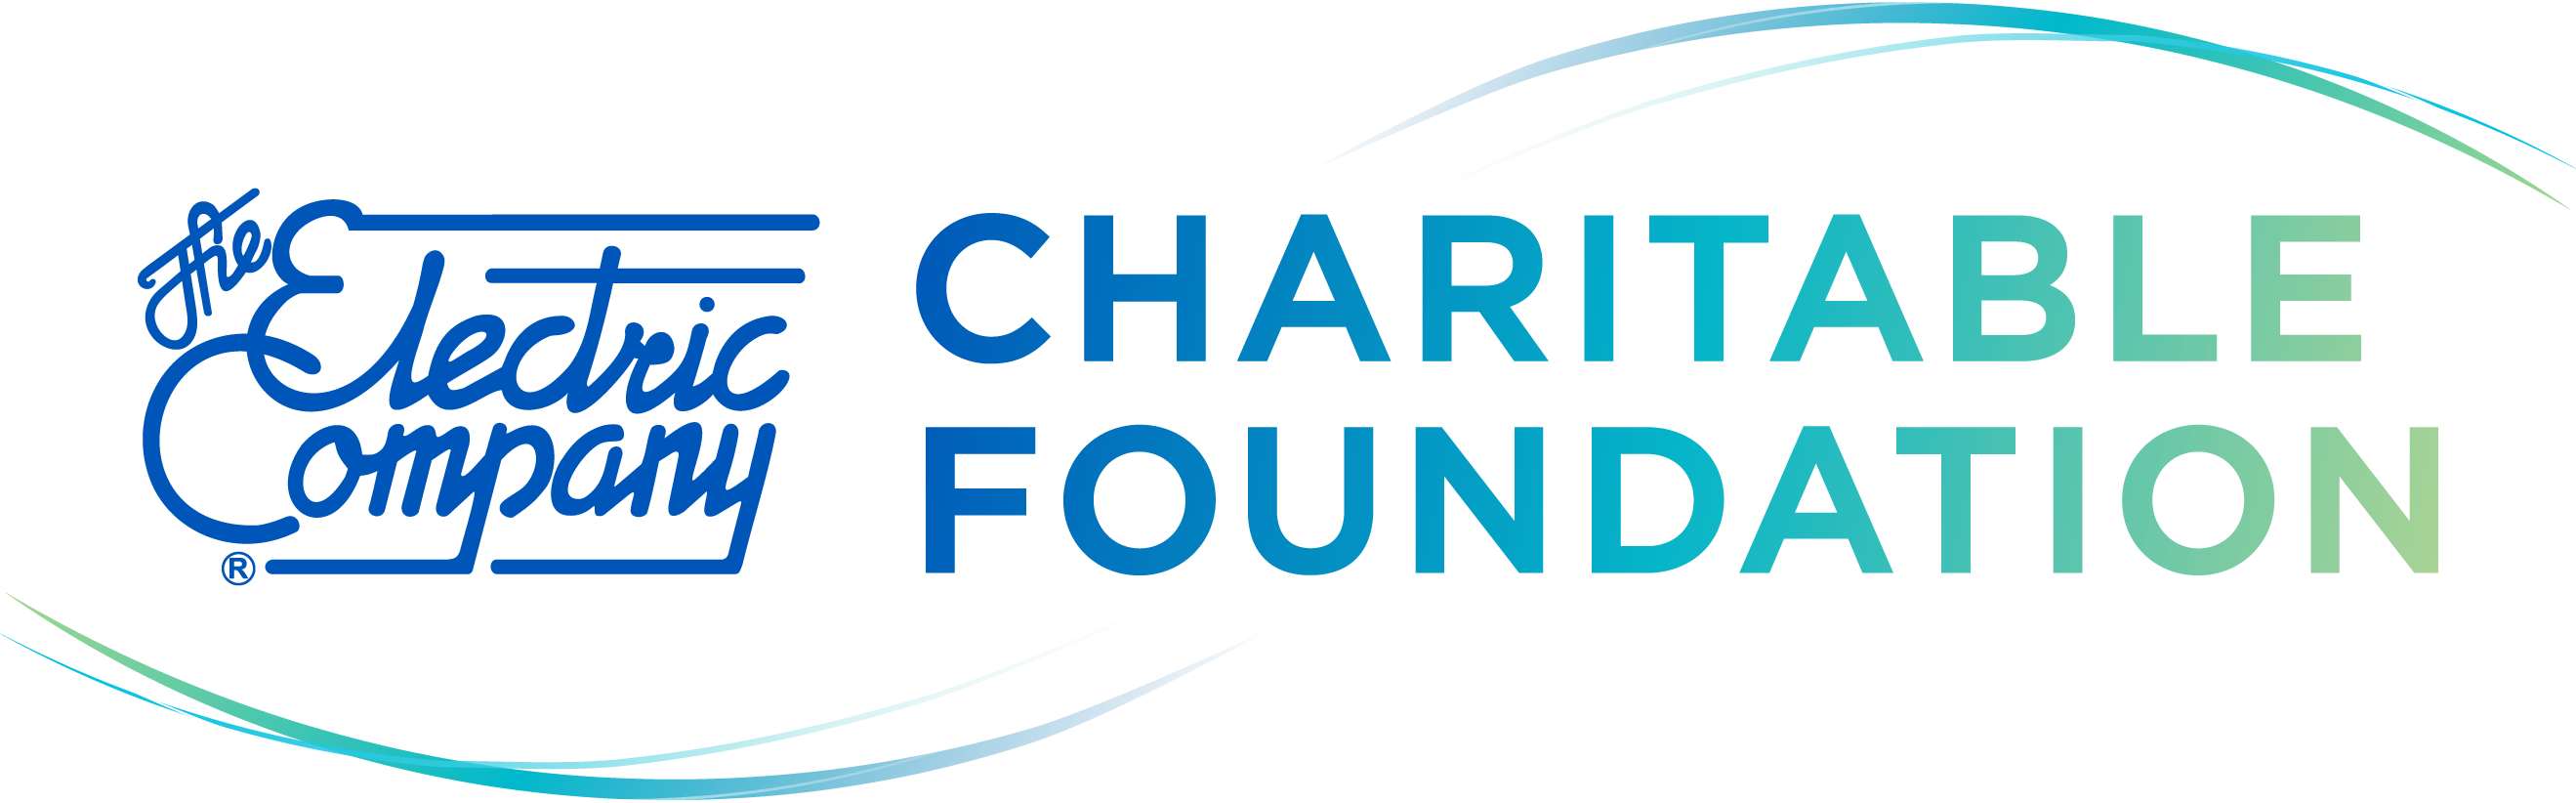 ECC Foundation Logo